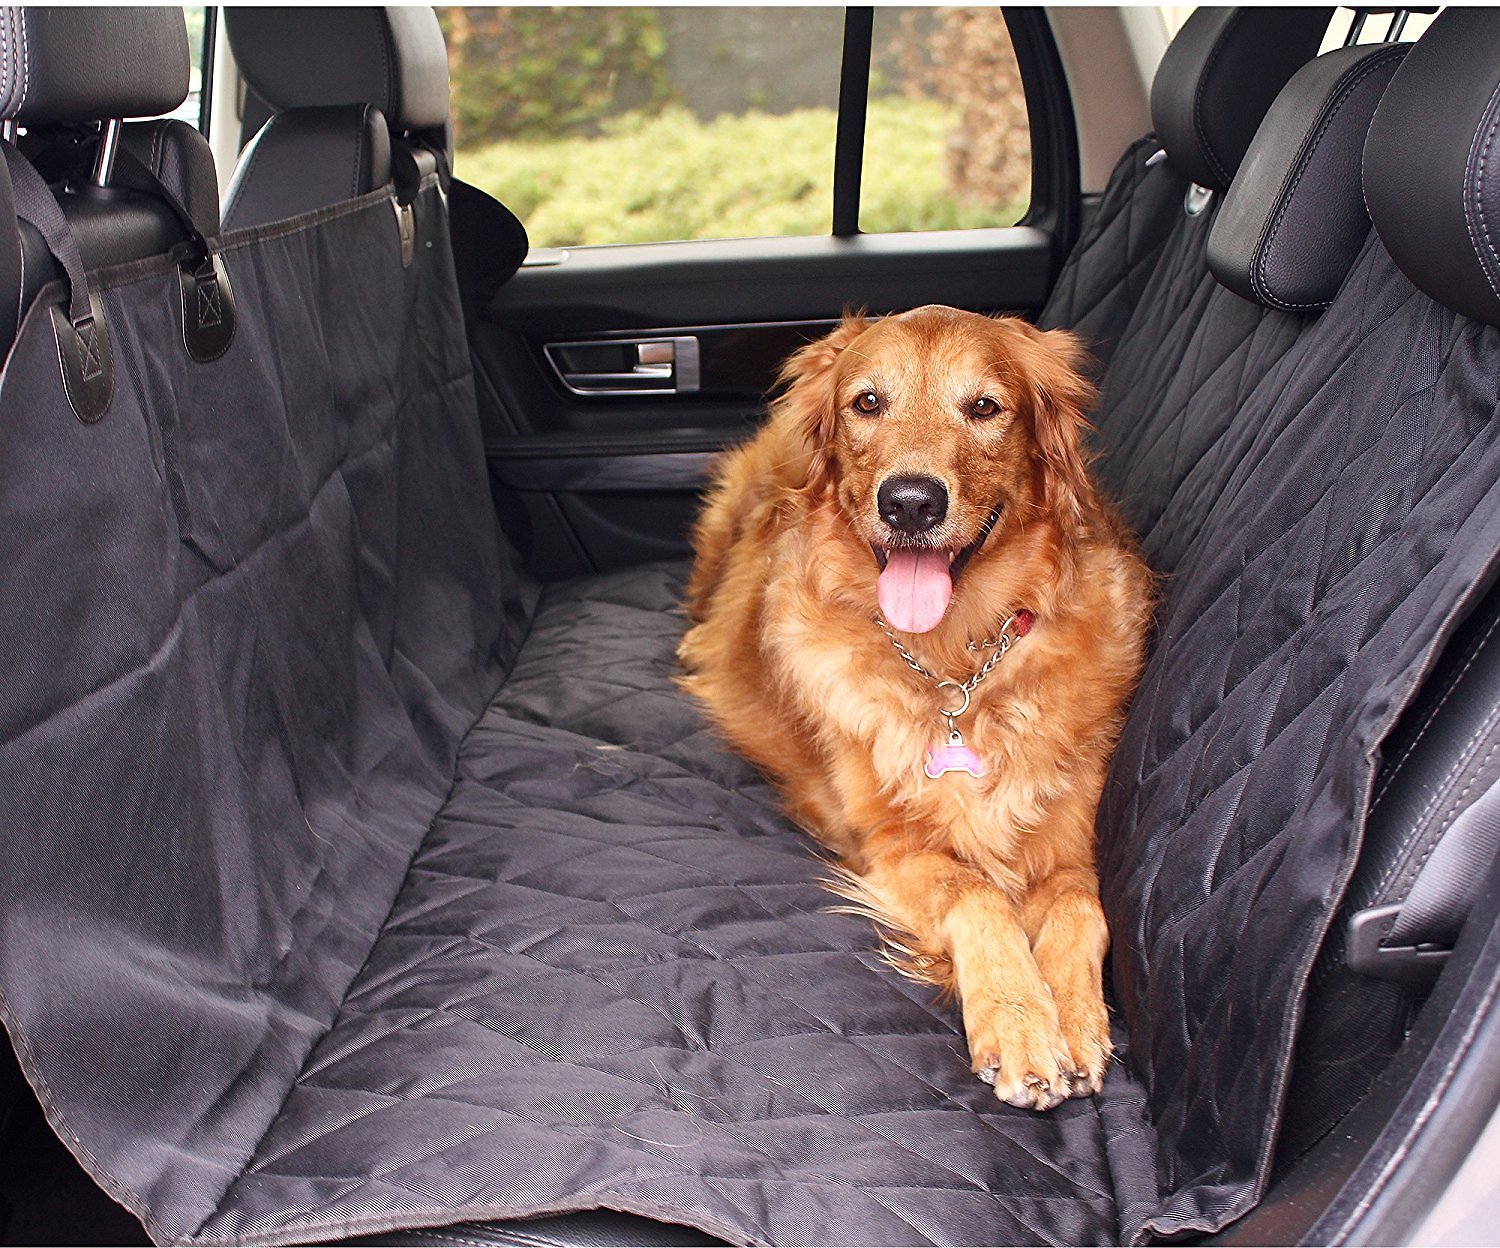 BarksBar Luxury Waterproof Car Seat Cover